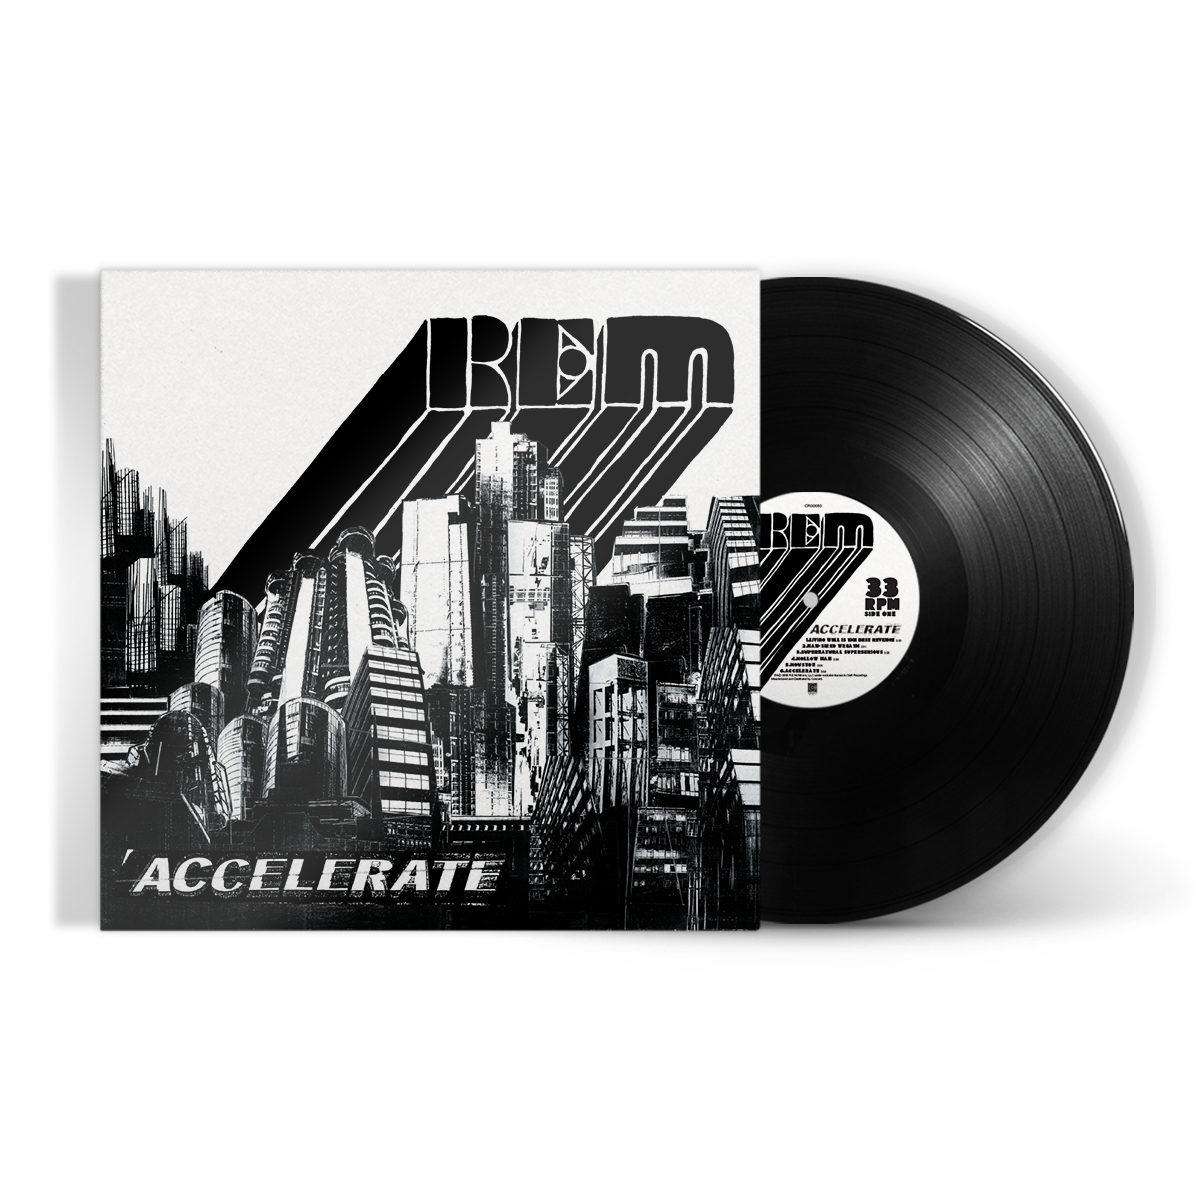 R.E.M. - Reveal: Vinyl LP - Sound of Vinyl